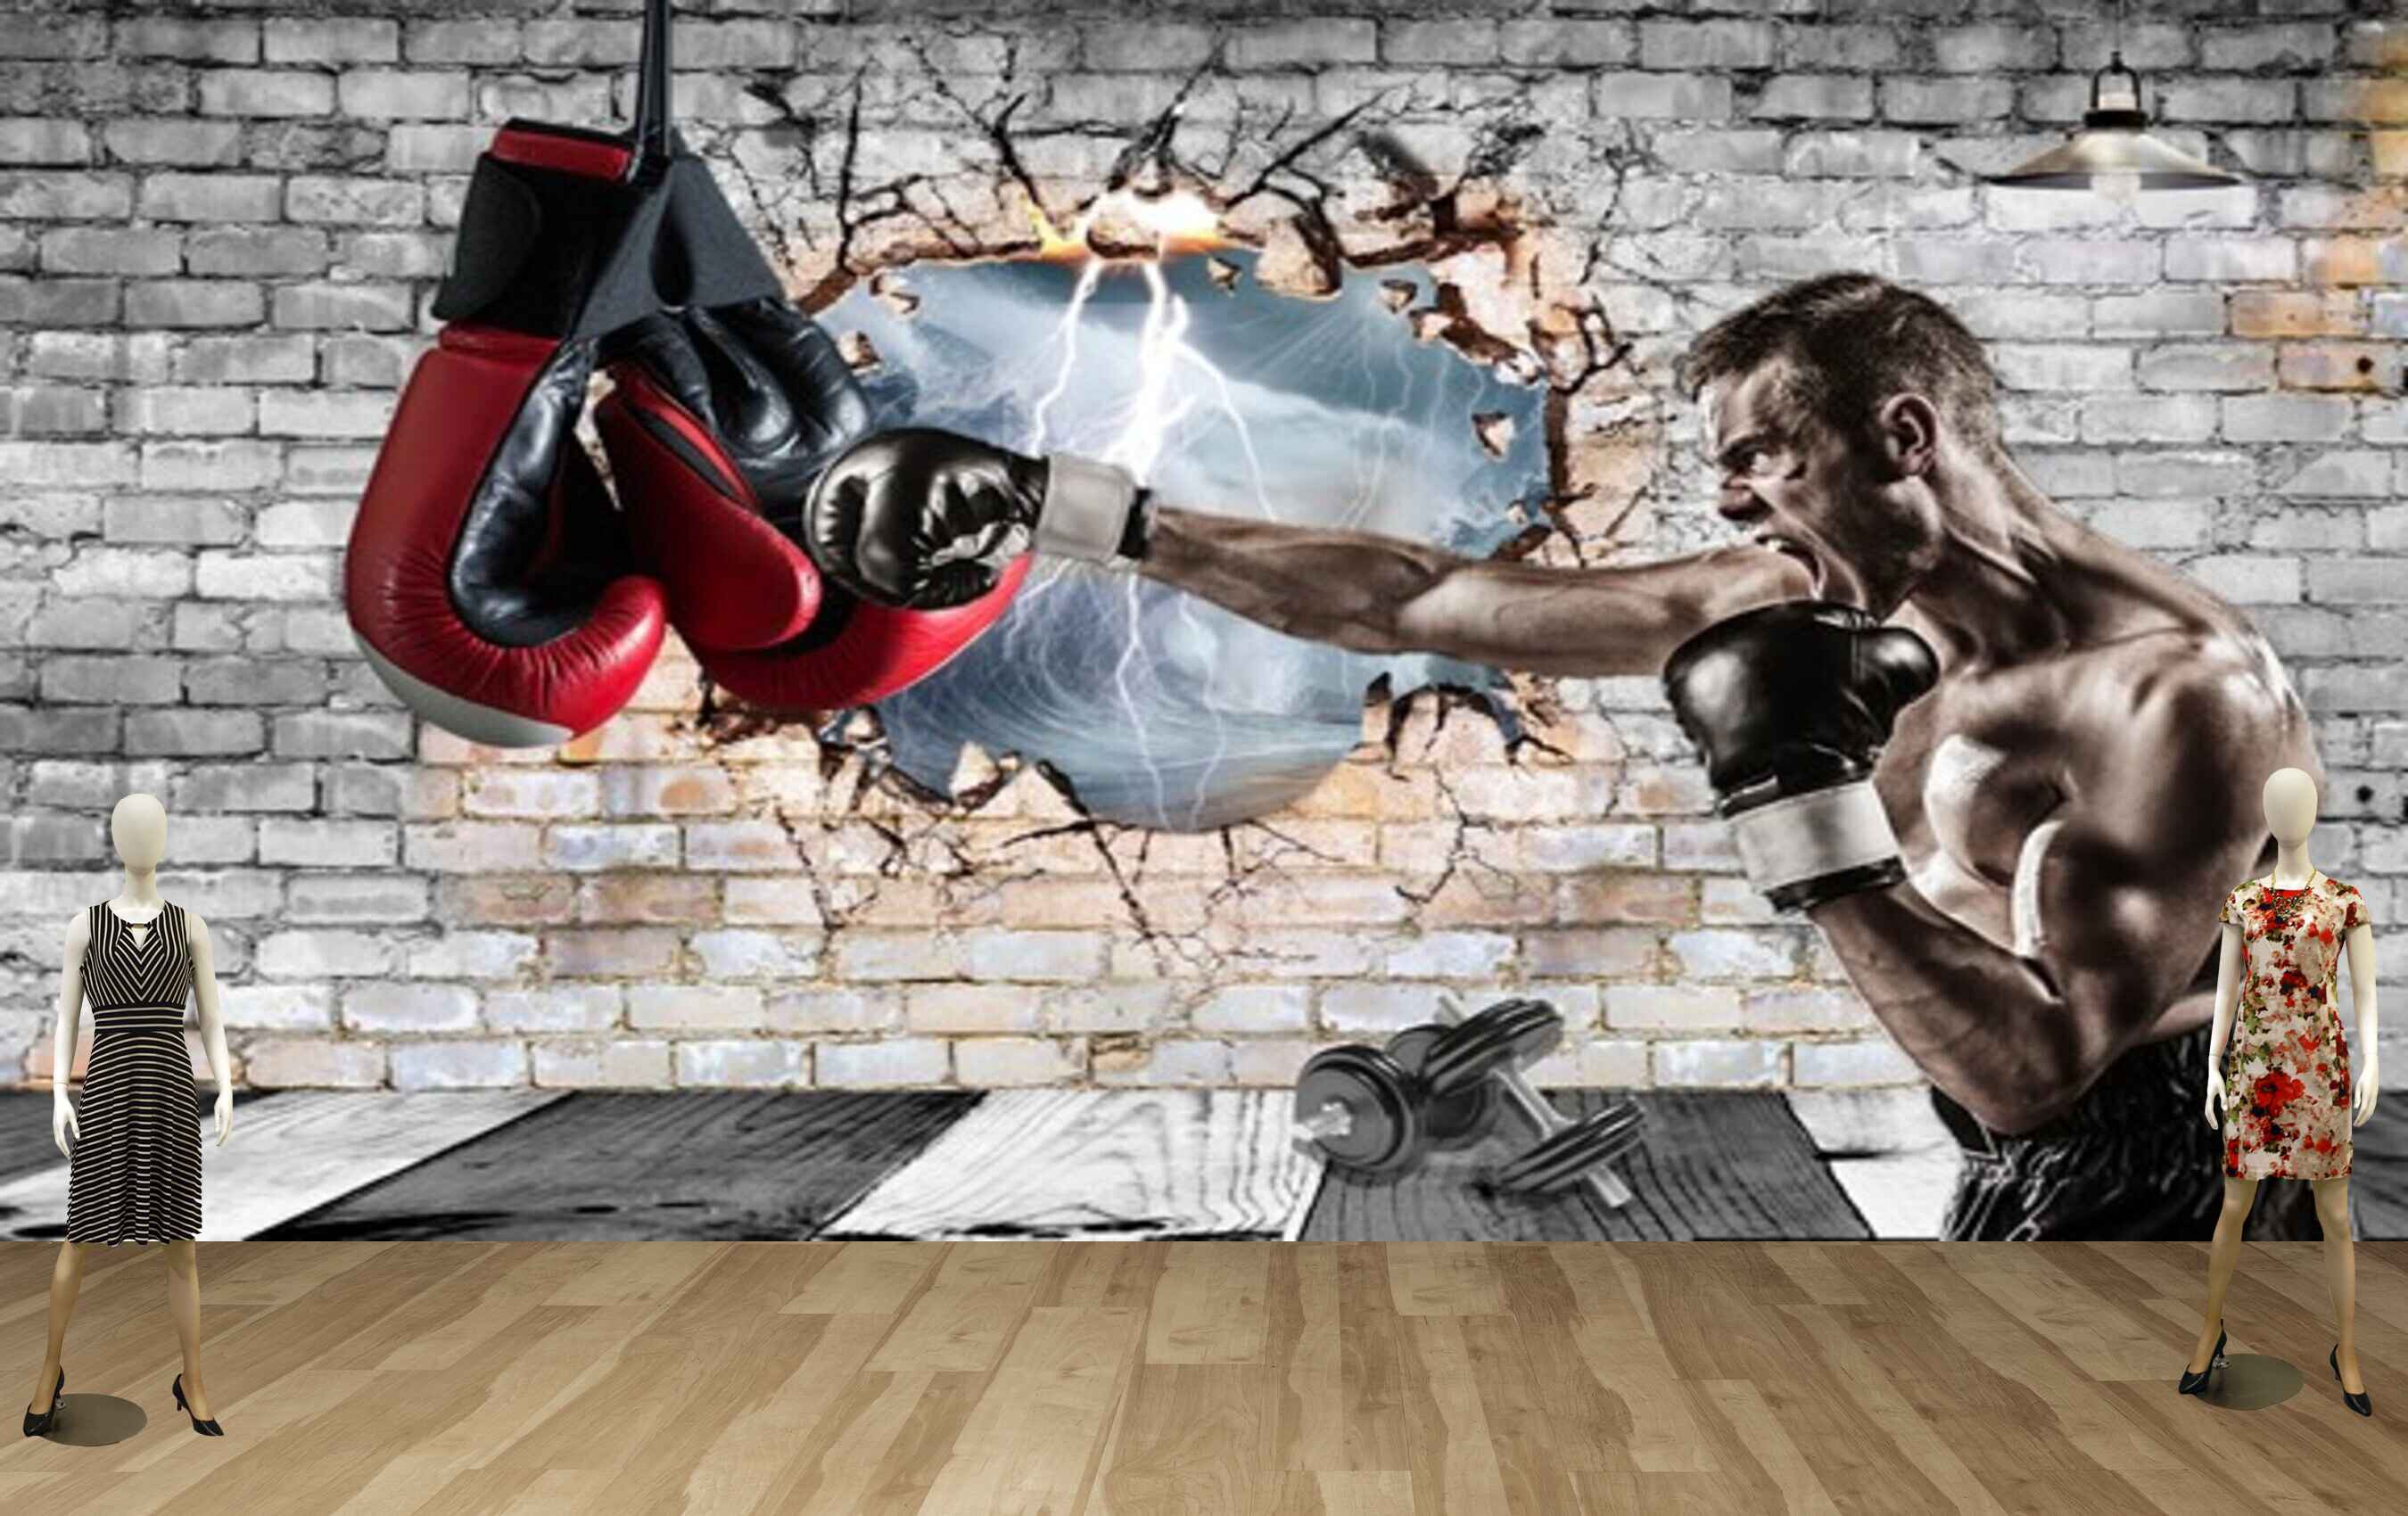 Avikalp MWZ3612 Fit Man Boxing Brick Wall HD Wallpaper for Gym Fitness